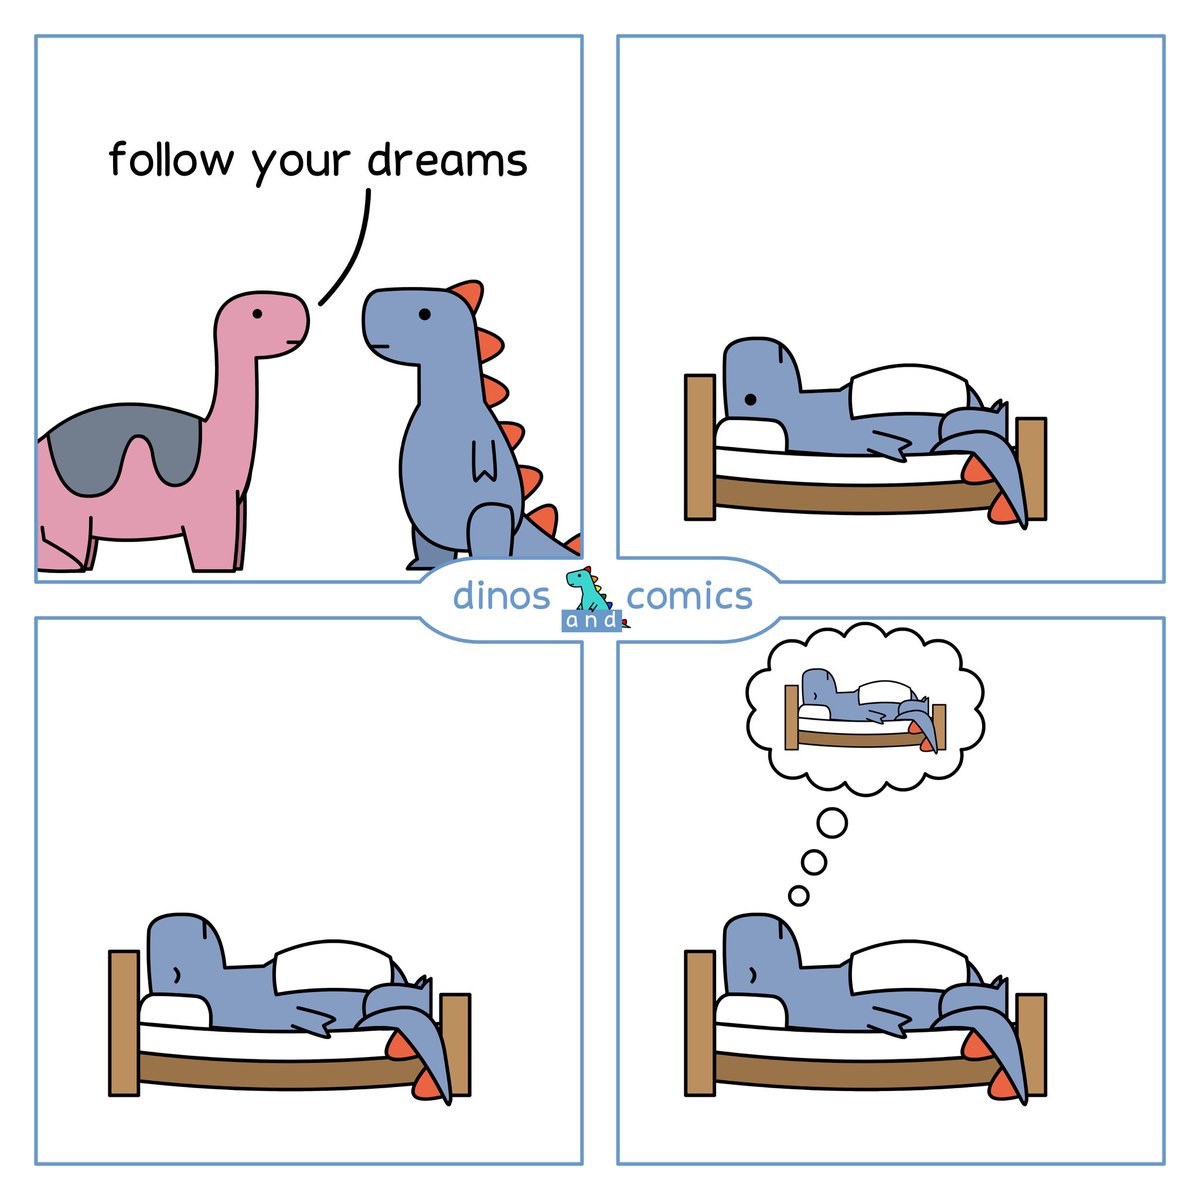 follow your dreams 